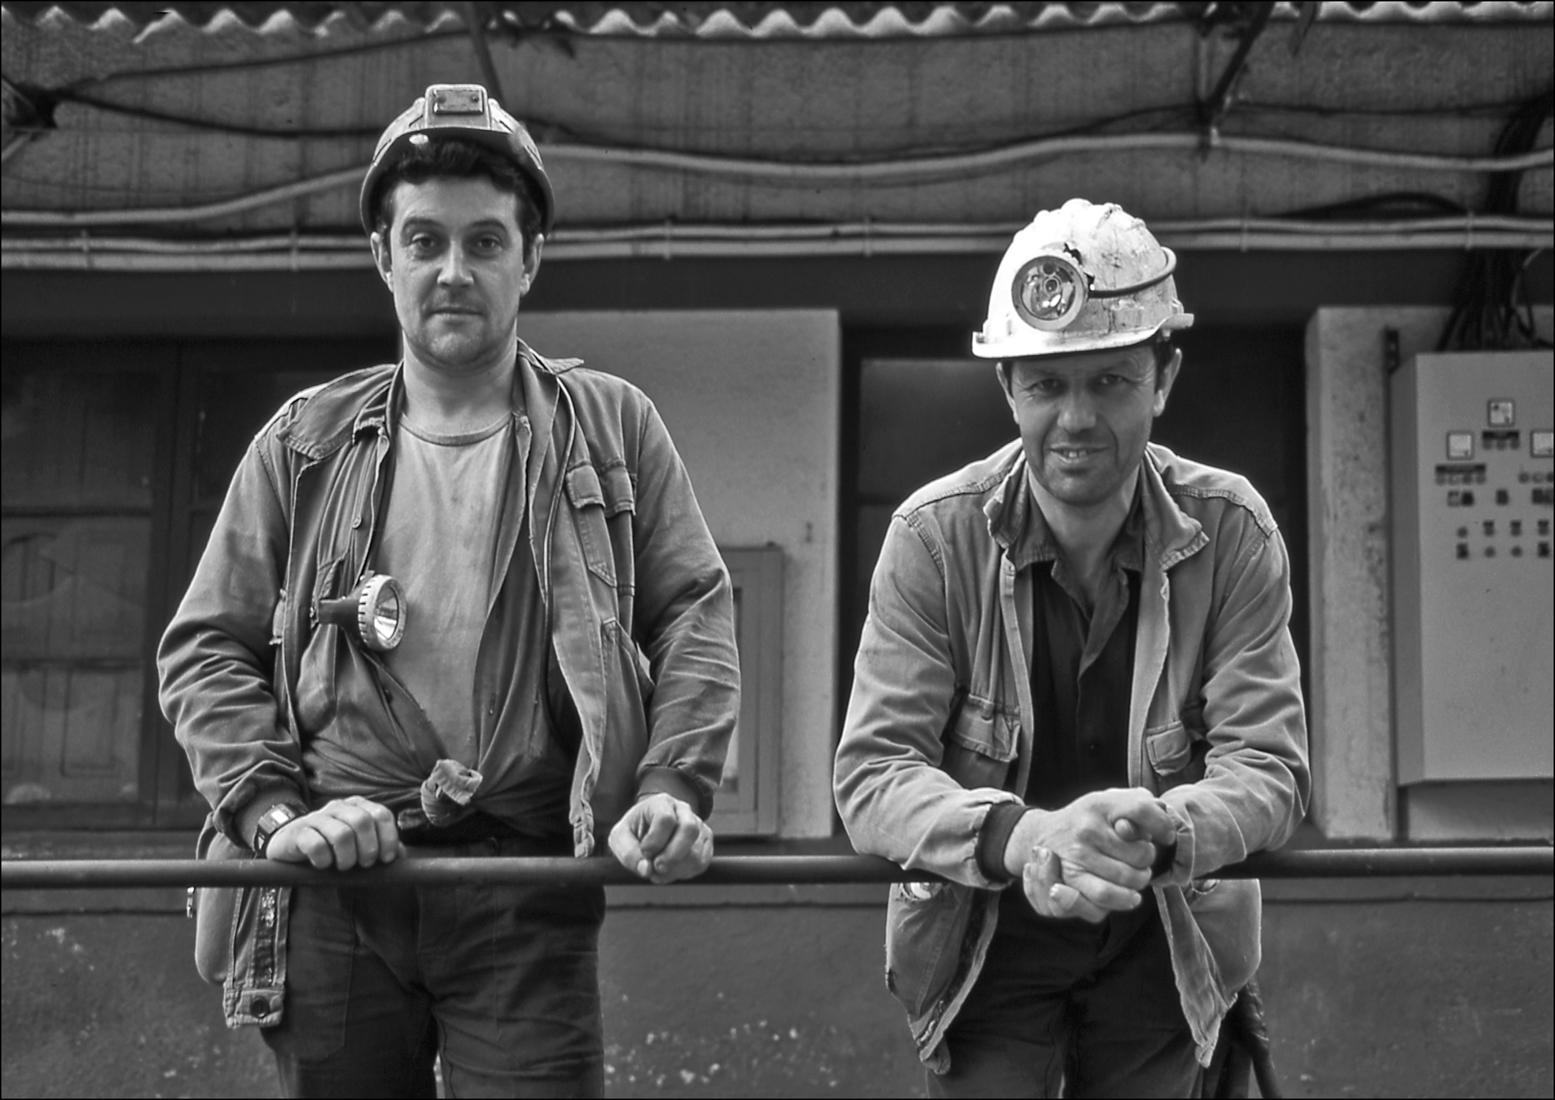 128 - Mineros del Pozo Pumarabule. Siero. Asturias 199 - BN